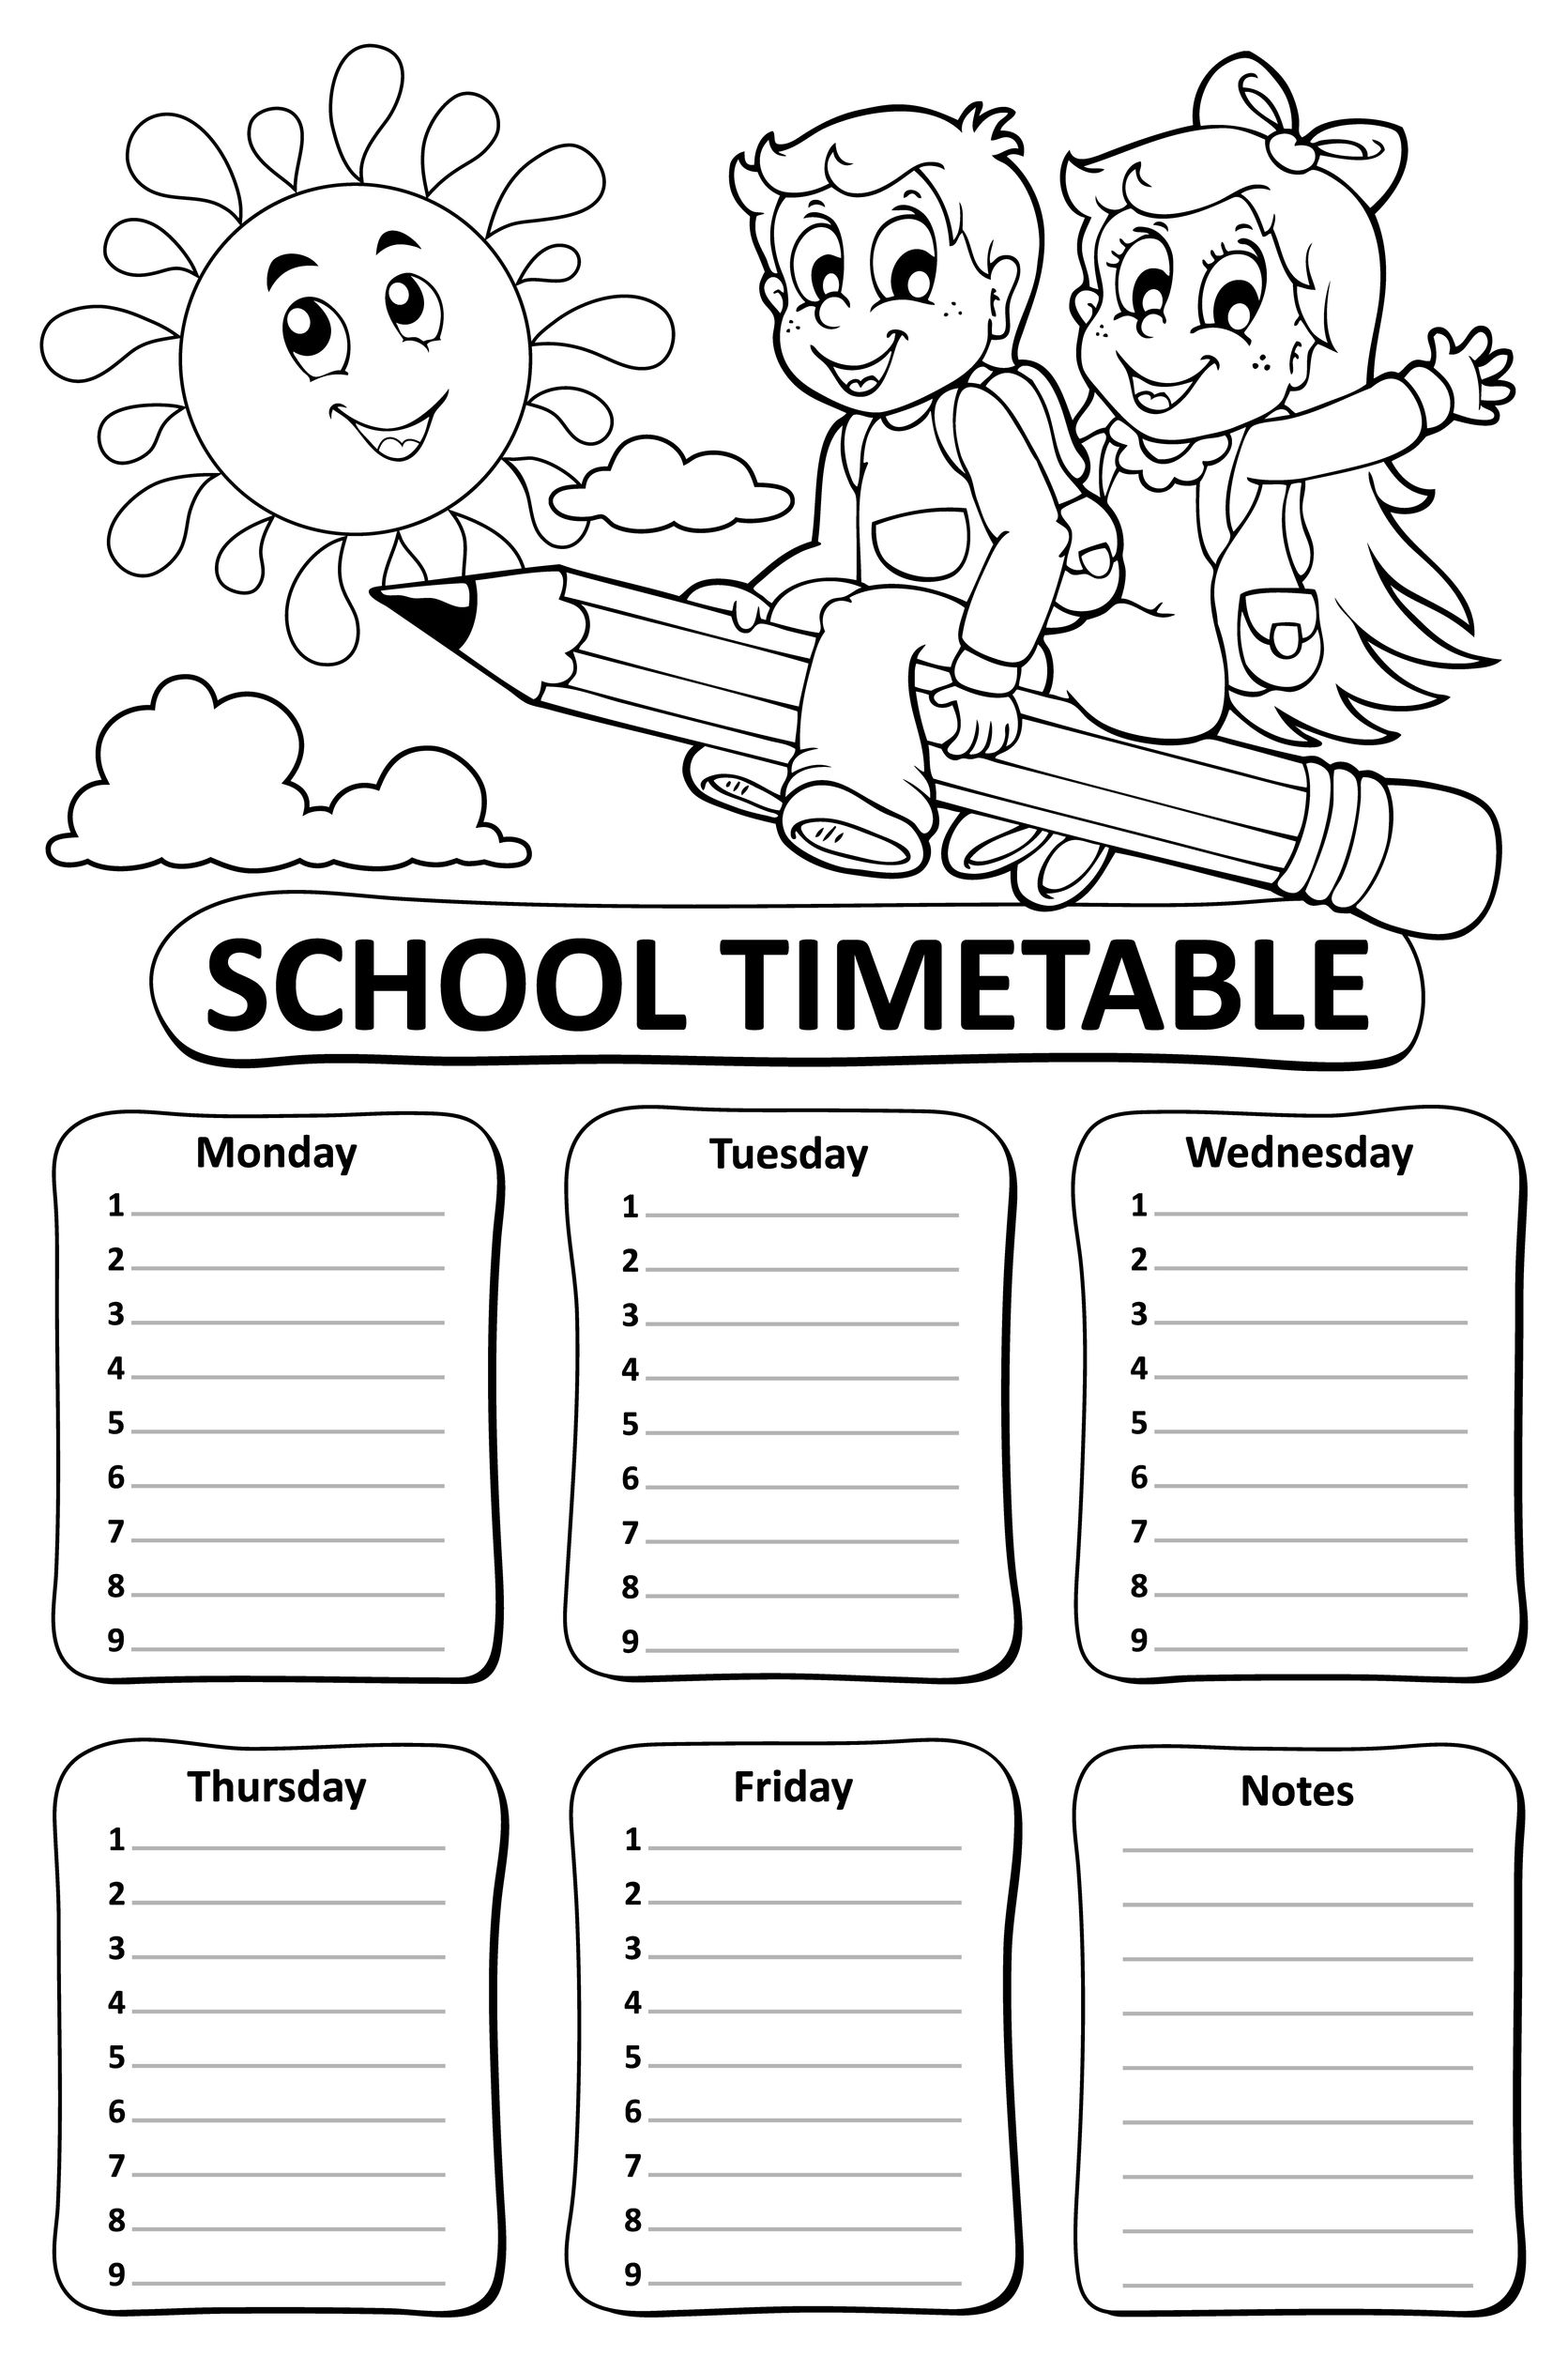 60233187 - black and white school timetable theme